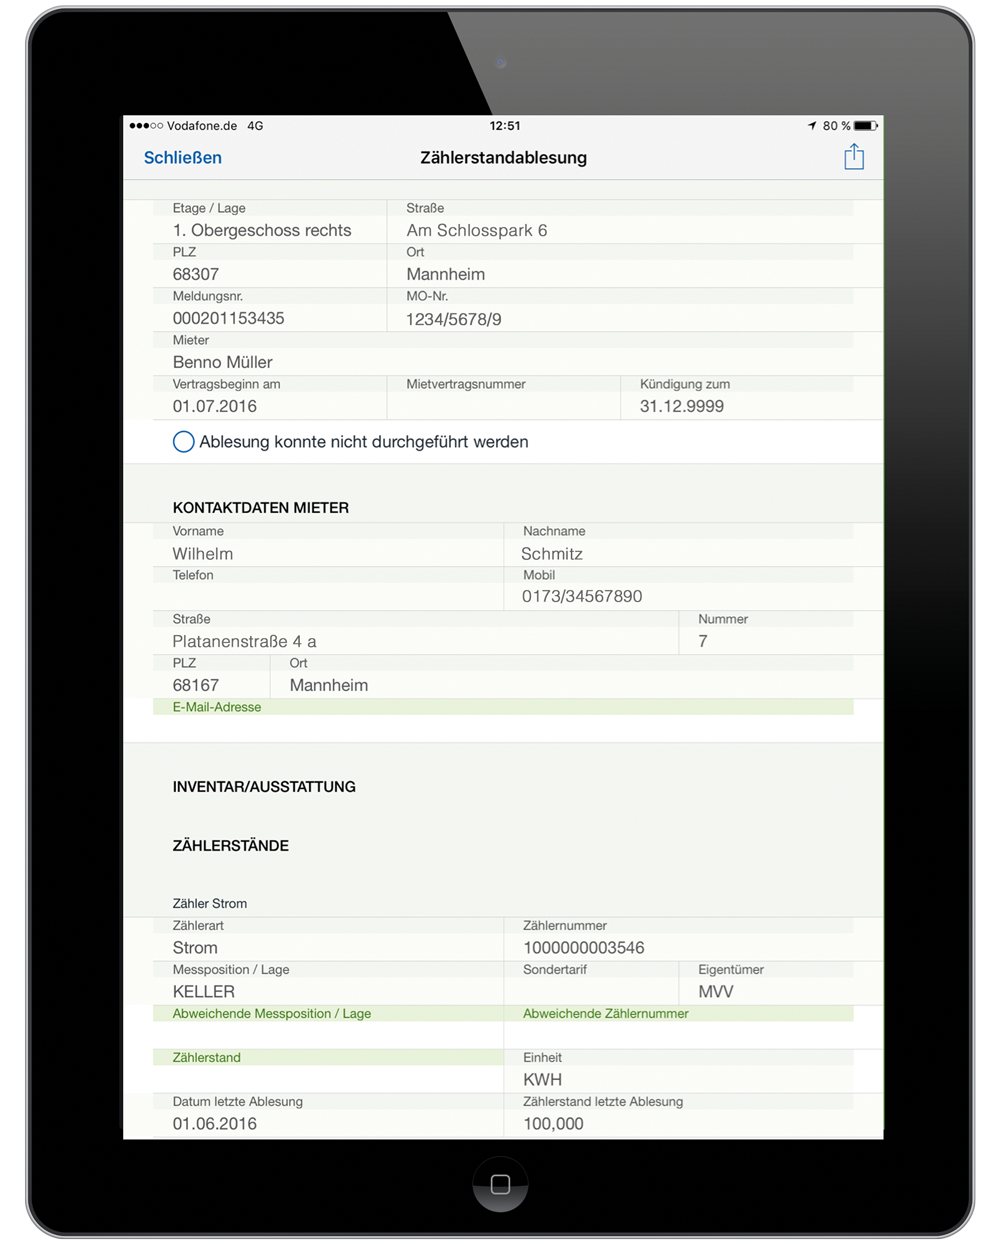 Zählerstandablesung in der easysquare mobile App auf dem iPad